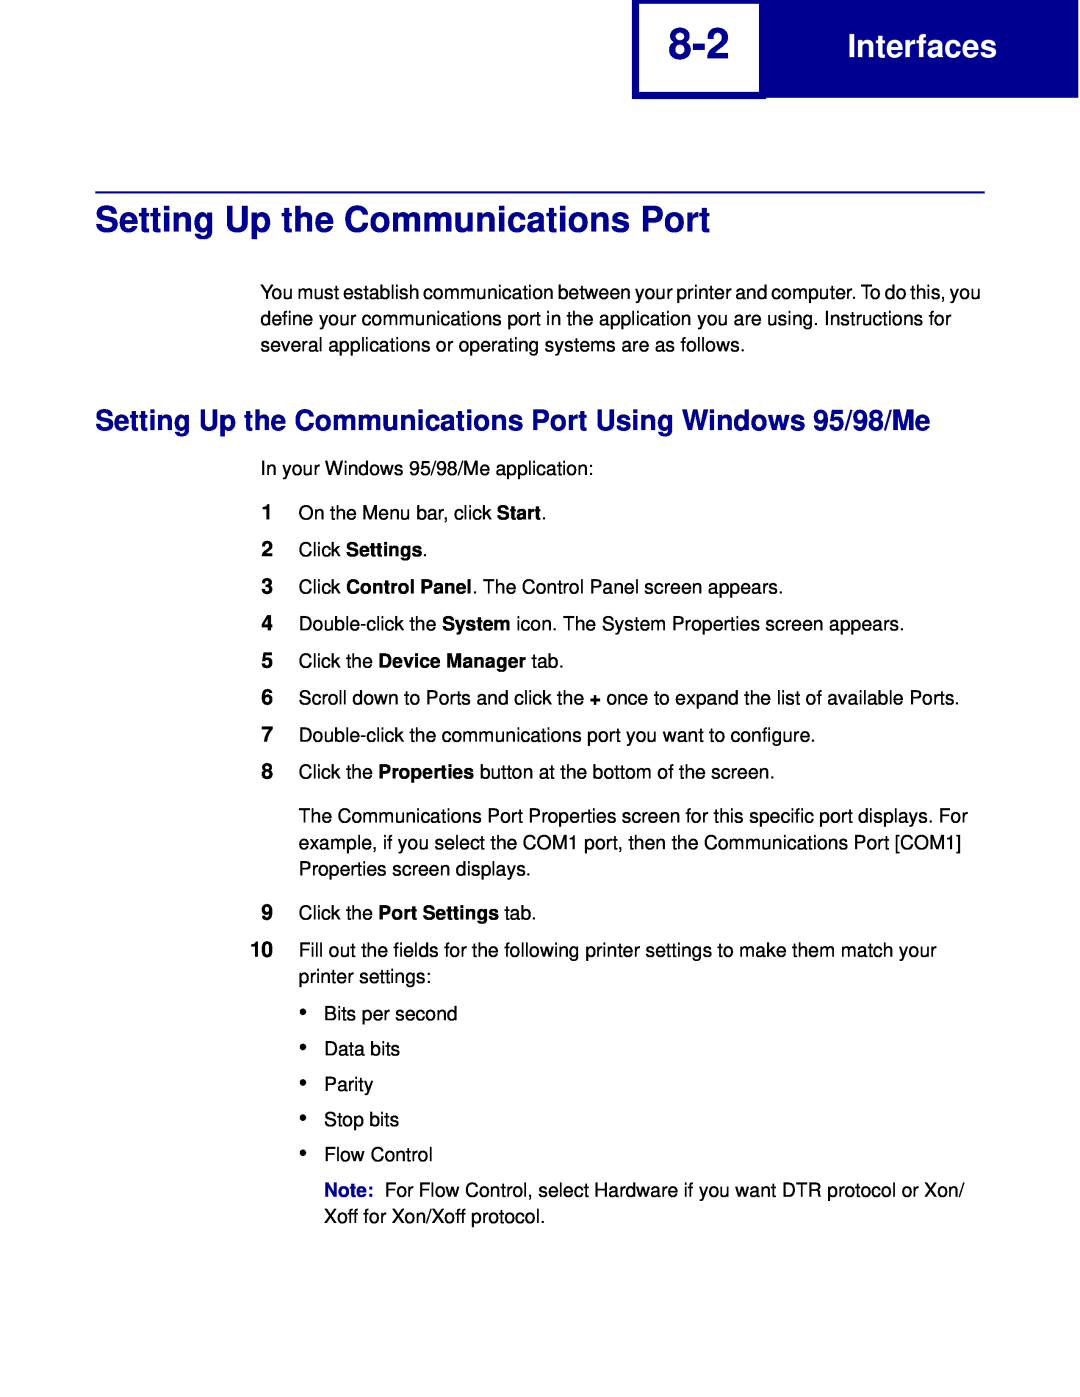 Lexmark C760, C762 manual Setting Up the Communications Port Using Windows 95/98/Me, Interfaces, Click Settings 